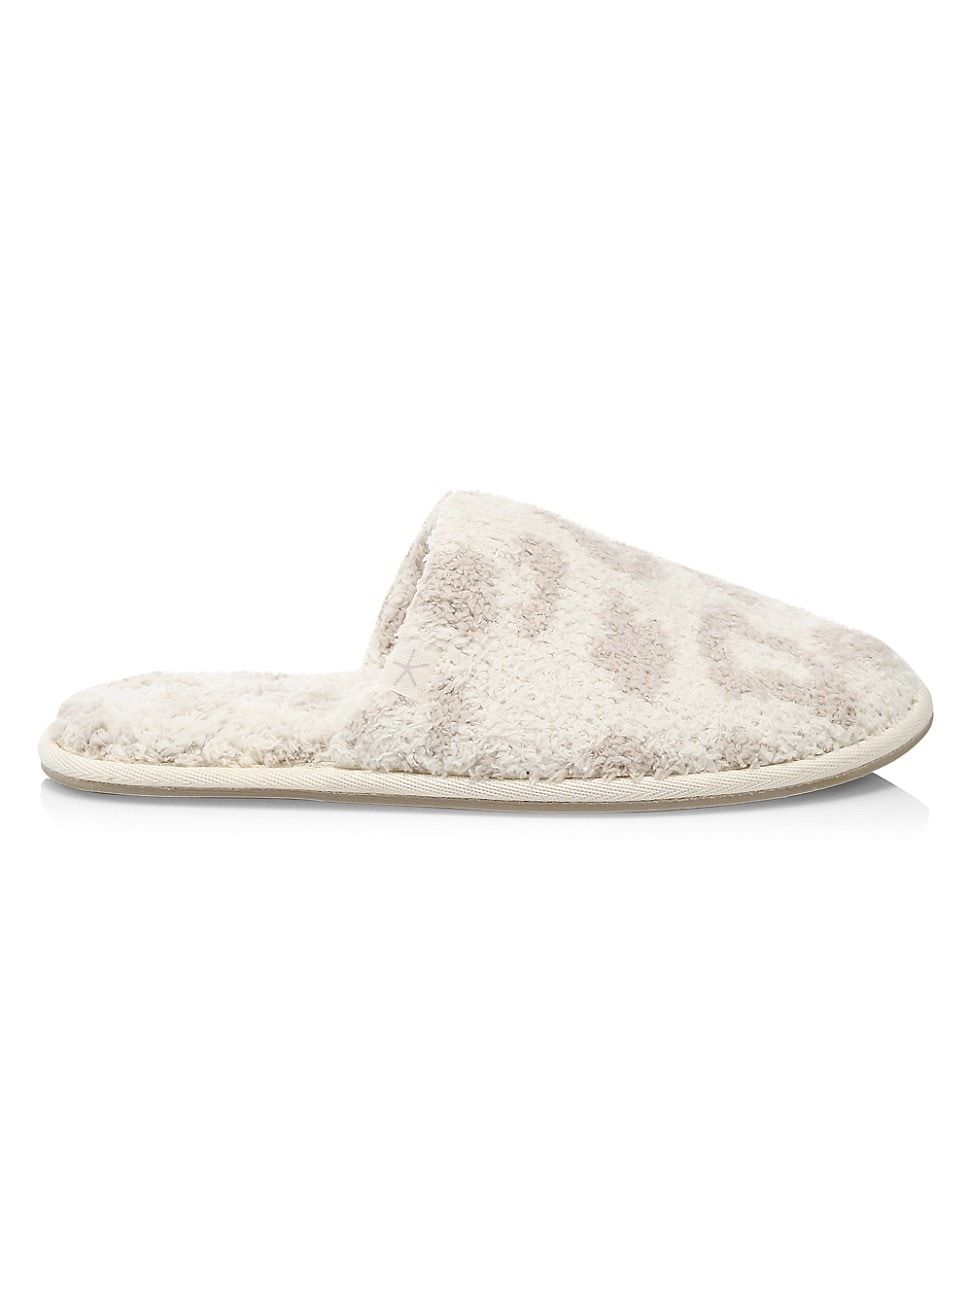 Women's Cozychic Leopard-Print Slippers - Cream - Size Small | Saks Fifth Avenue